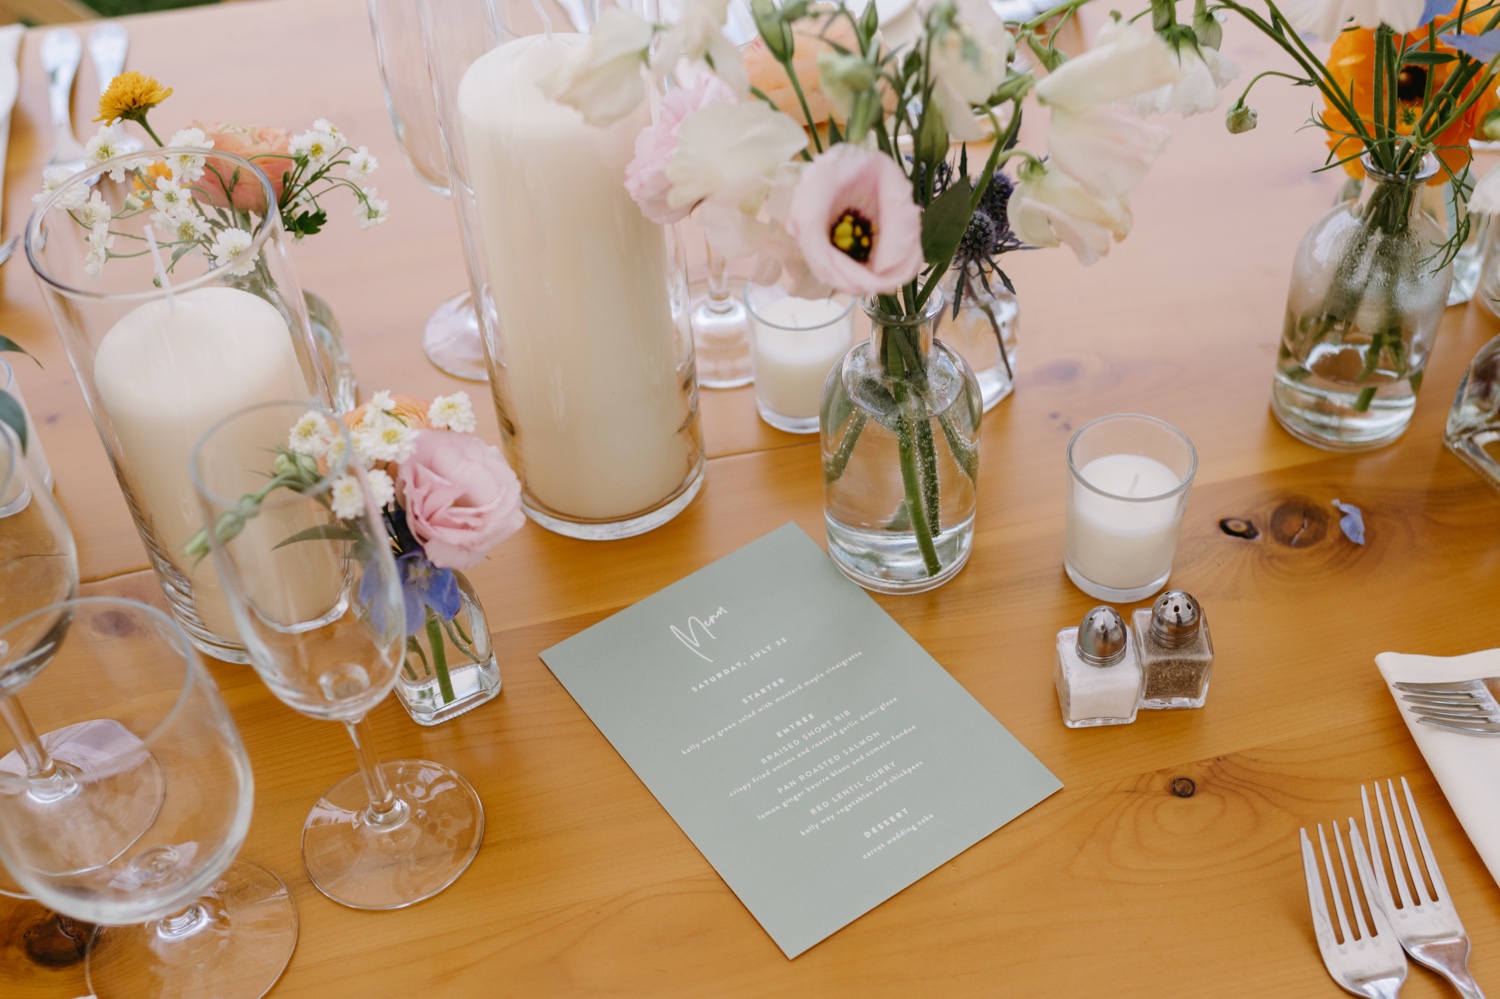 woodstock inn wedding reception venue details florals